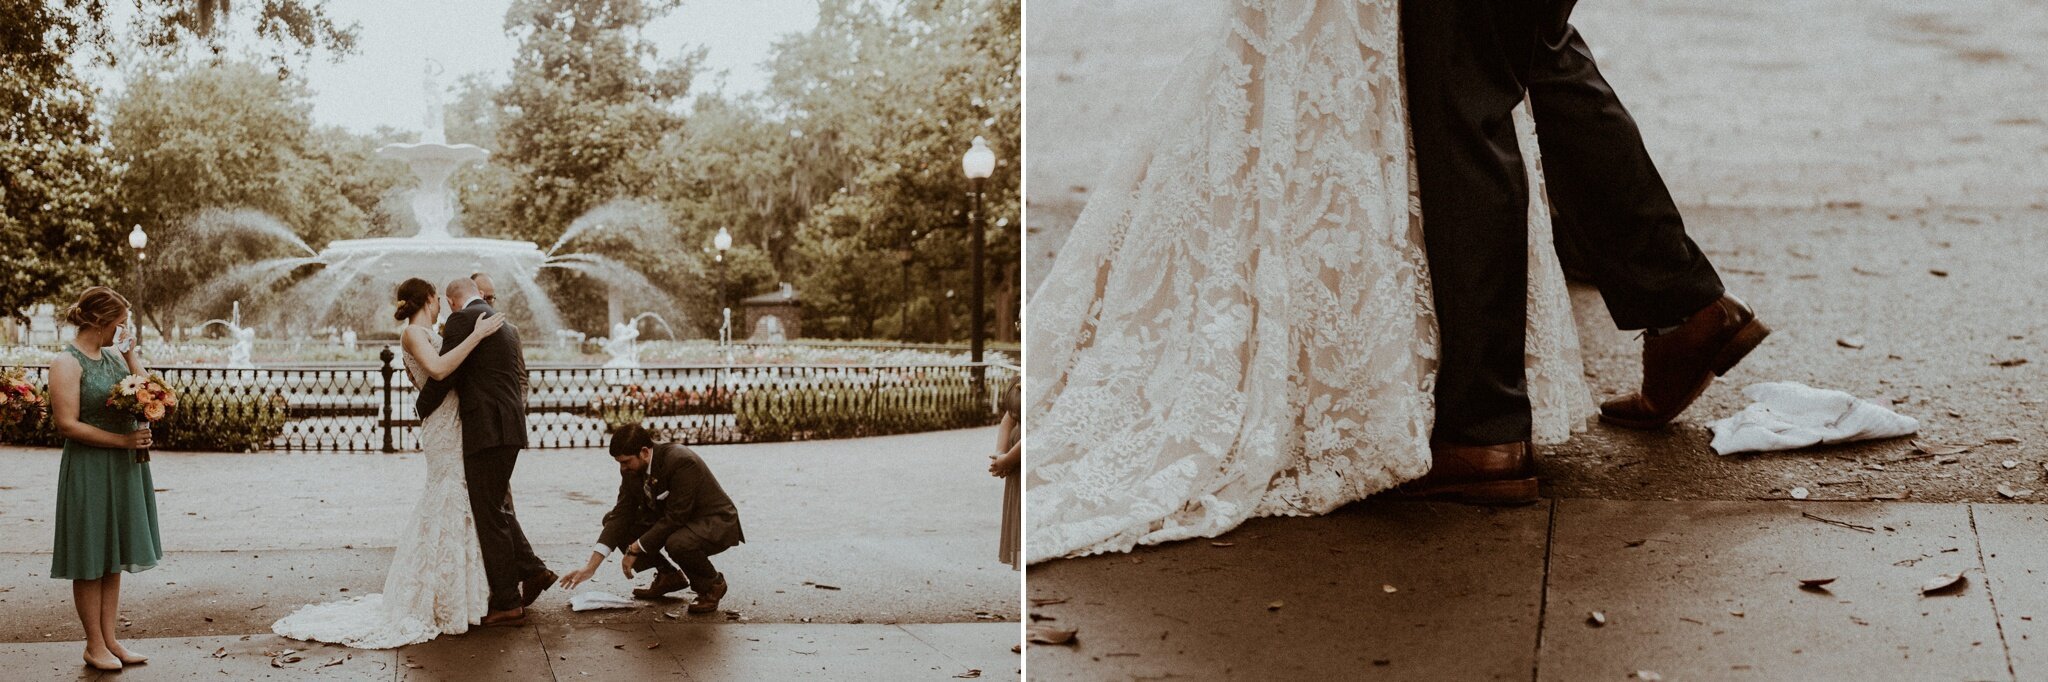 forsyth-park-wedding-destination-wedding-photographers-boston-vanessaalvesphotography-68.jpg